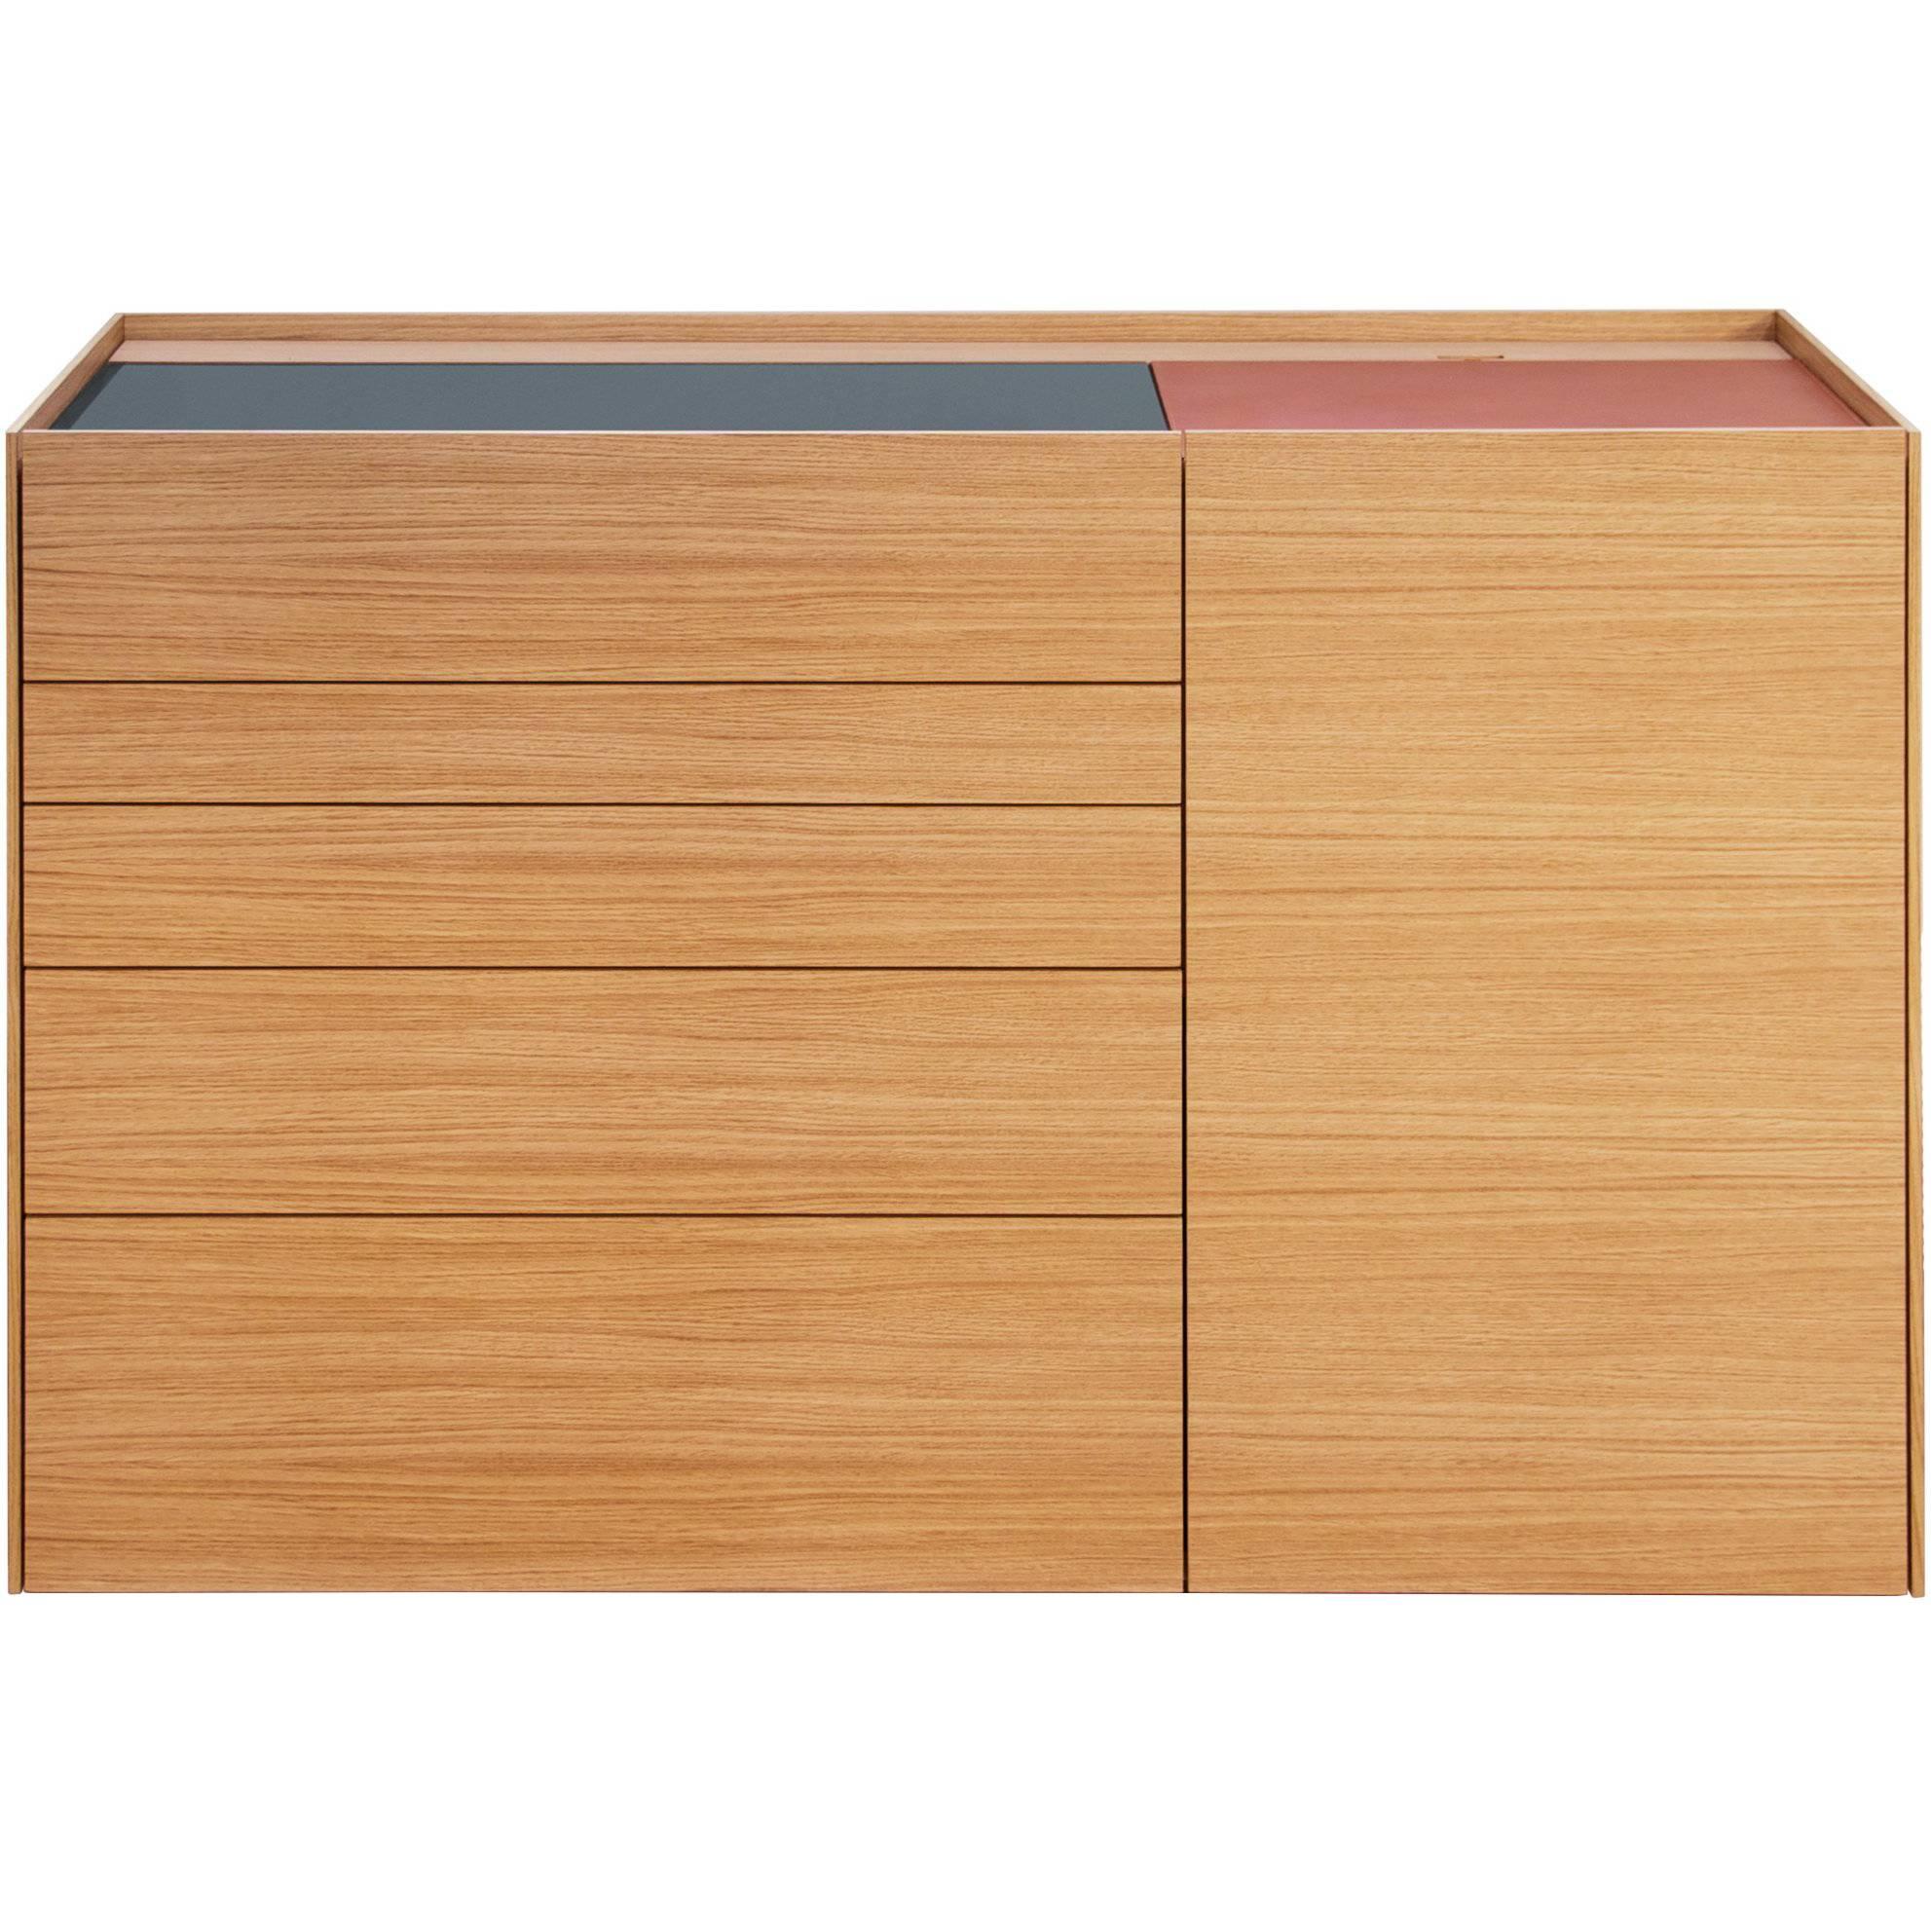 "Brown" Pc/Laptop Unit Cabinet or Desk Designed by Stephane Lebrun for Dessie'